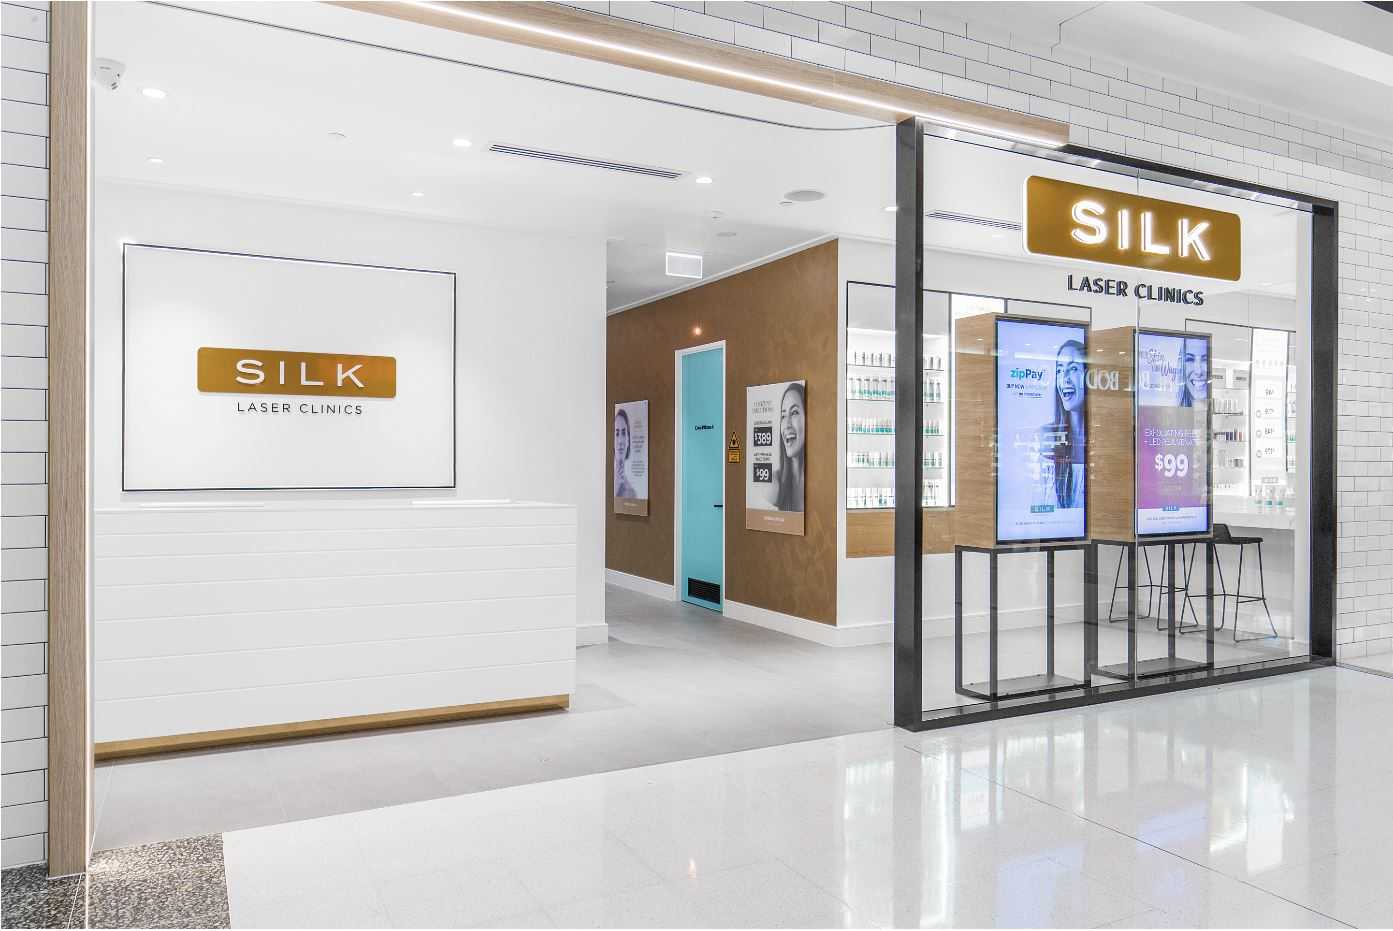 Silk-Laser-Clinics-Rockhampton